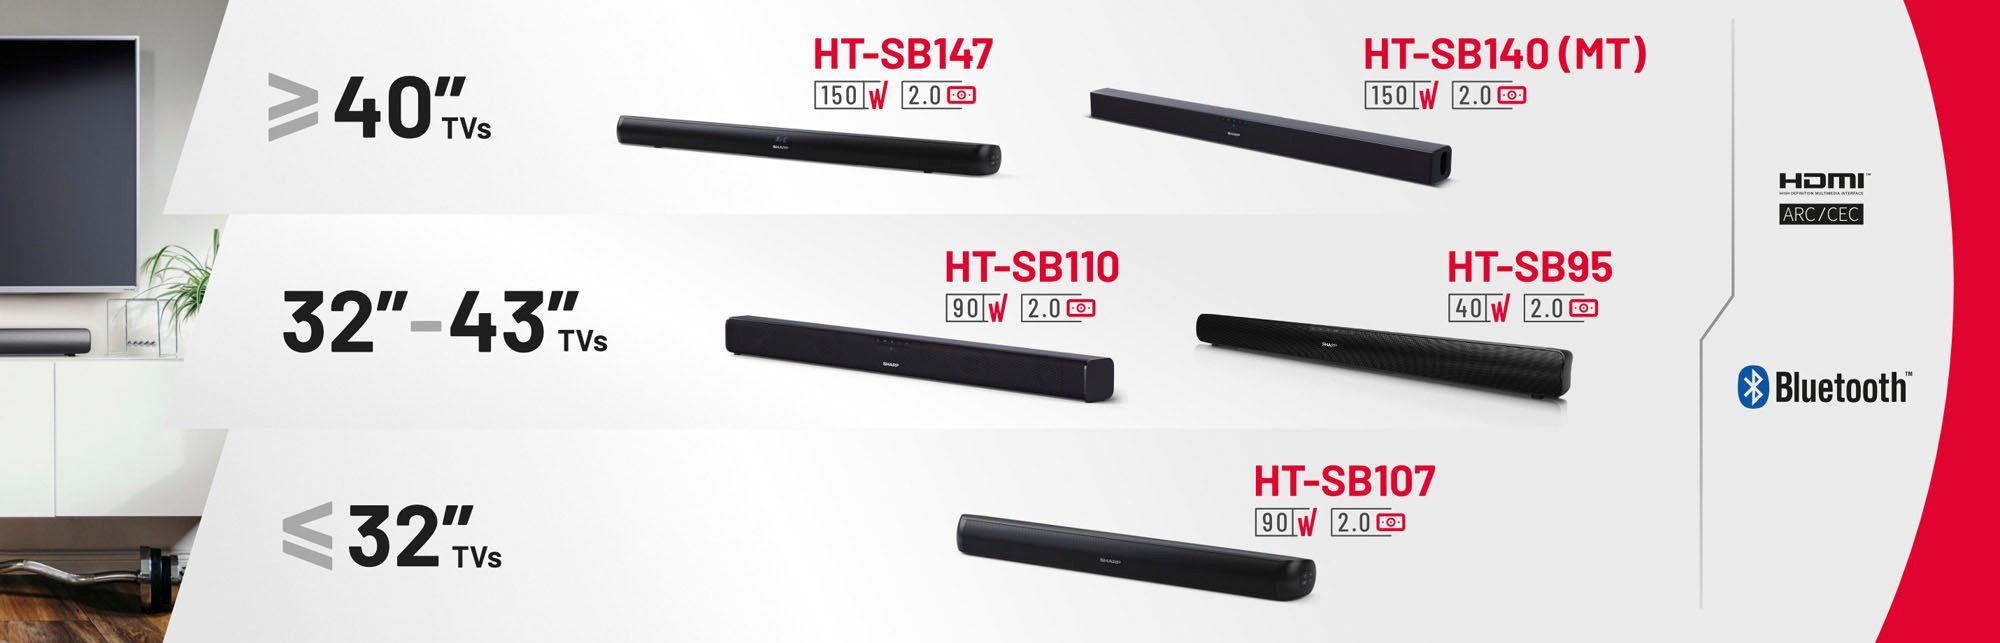 (Bluetooth) Sharp Soundbar HT-SB147 Stereo